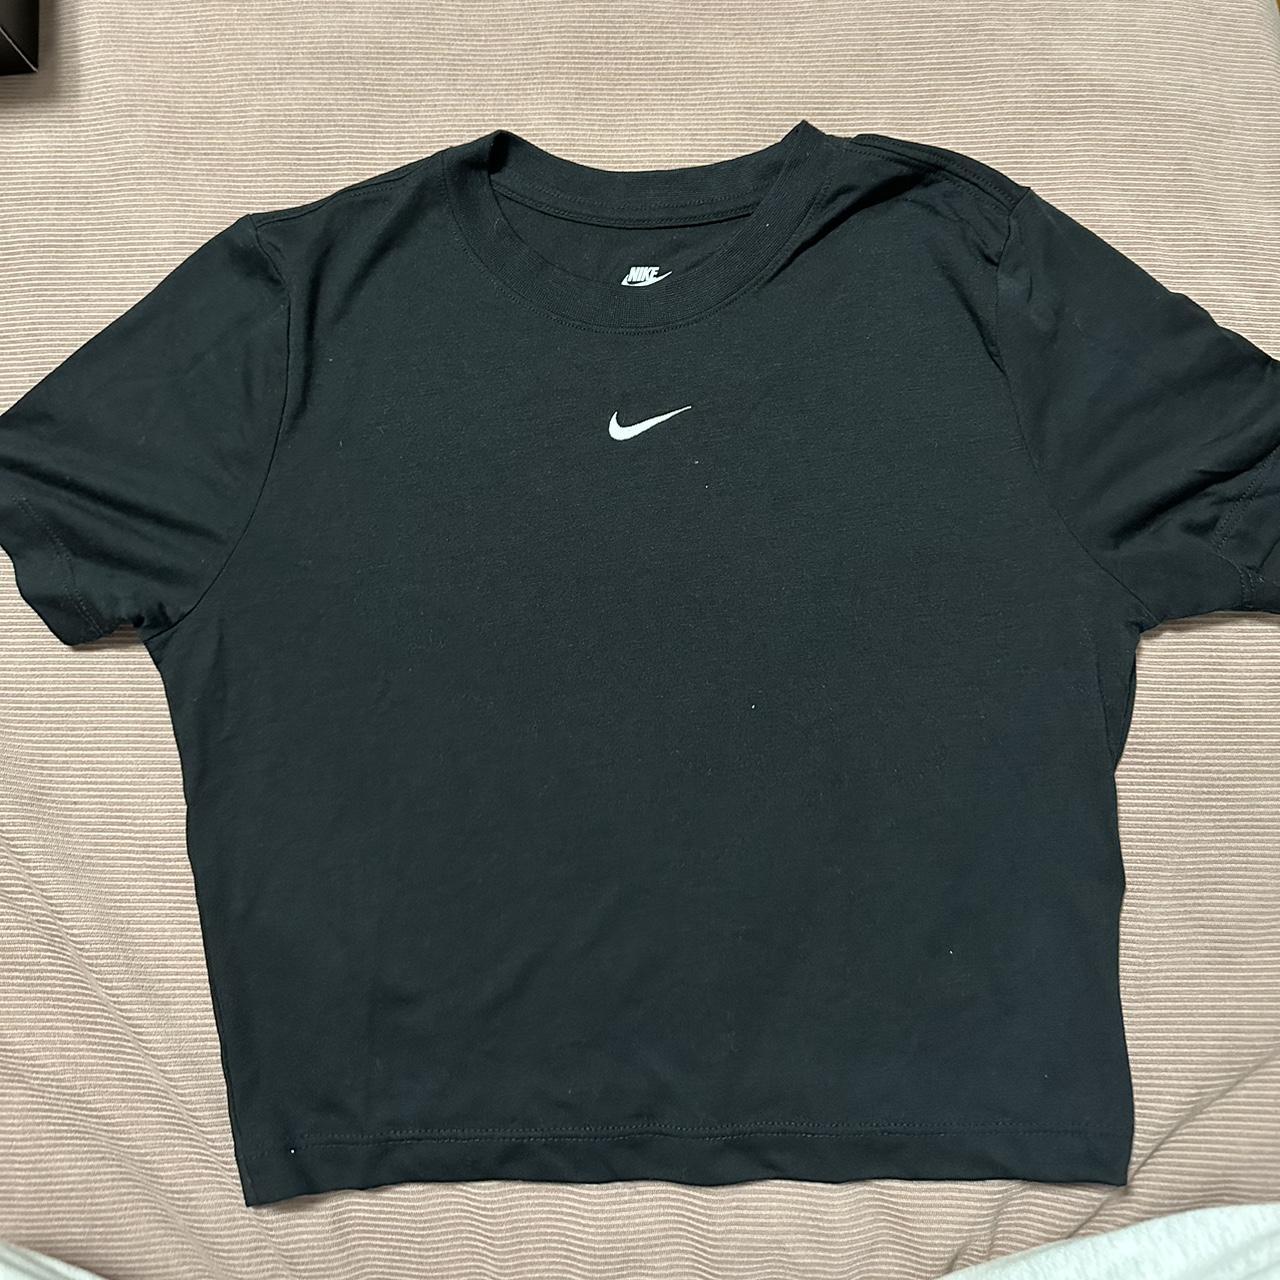 Nike t shirt Worn a few times #nike #tshirt... - Depop